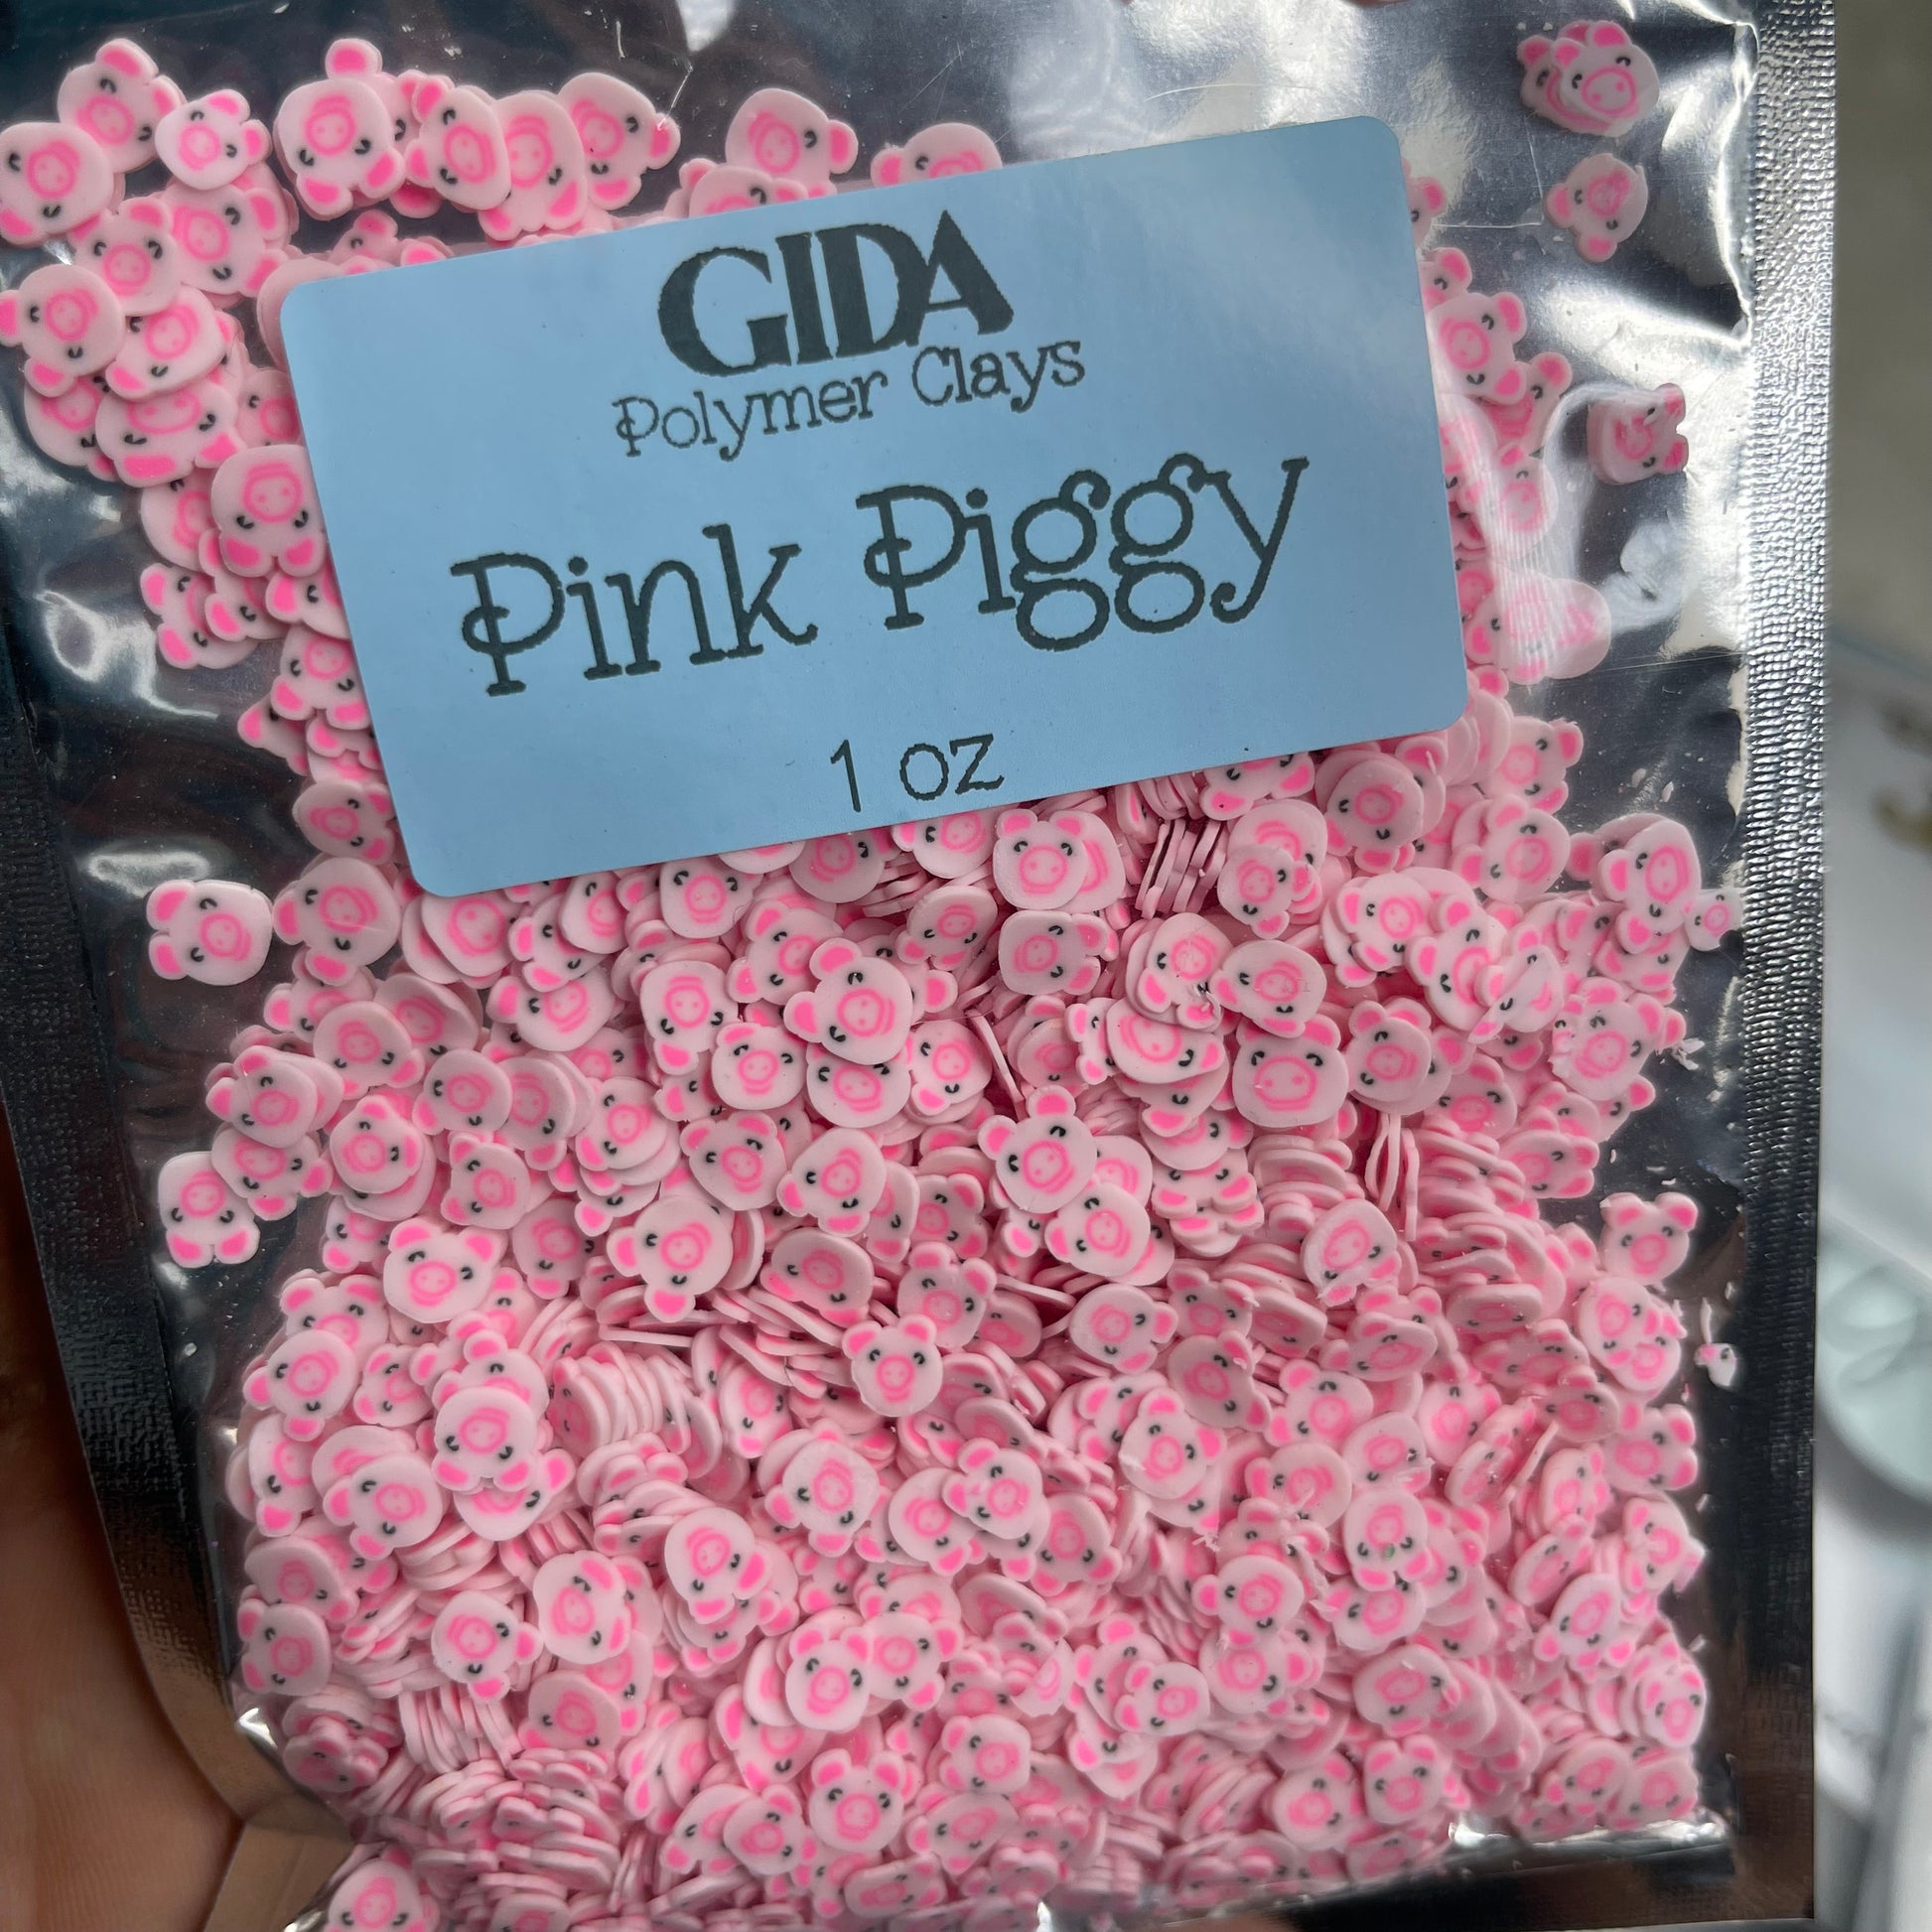 Pink Piggy Polymer clay 1 oz - GIDA DESIGN 